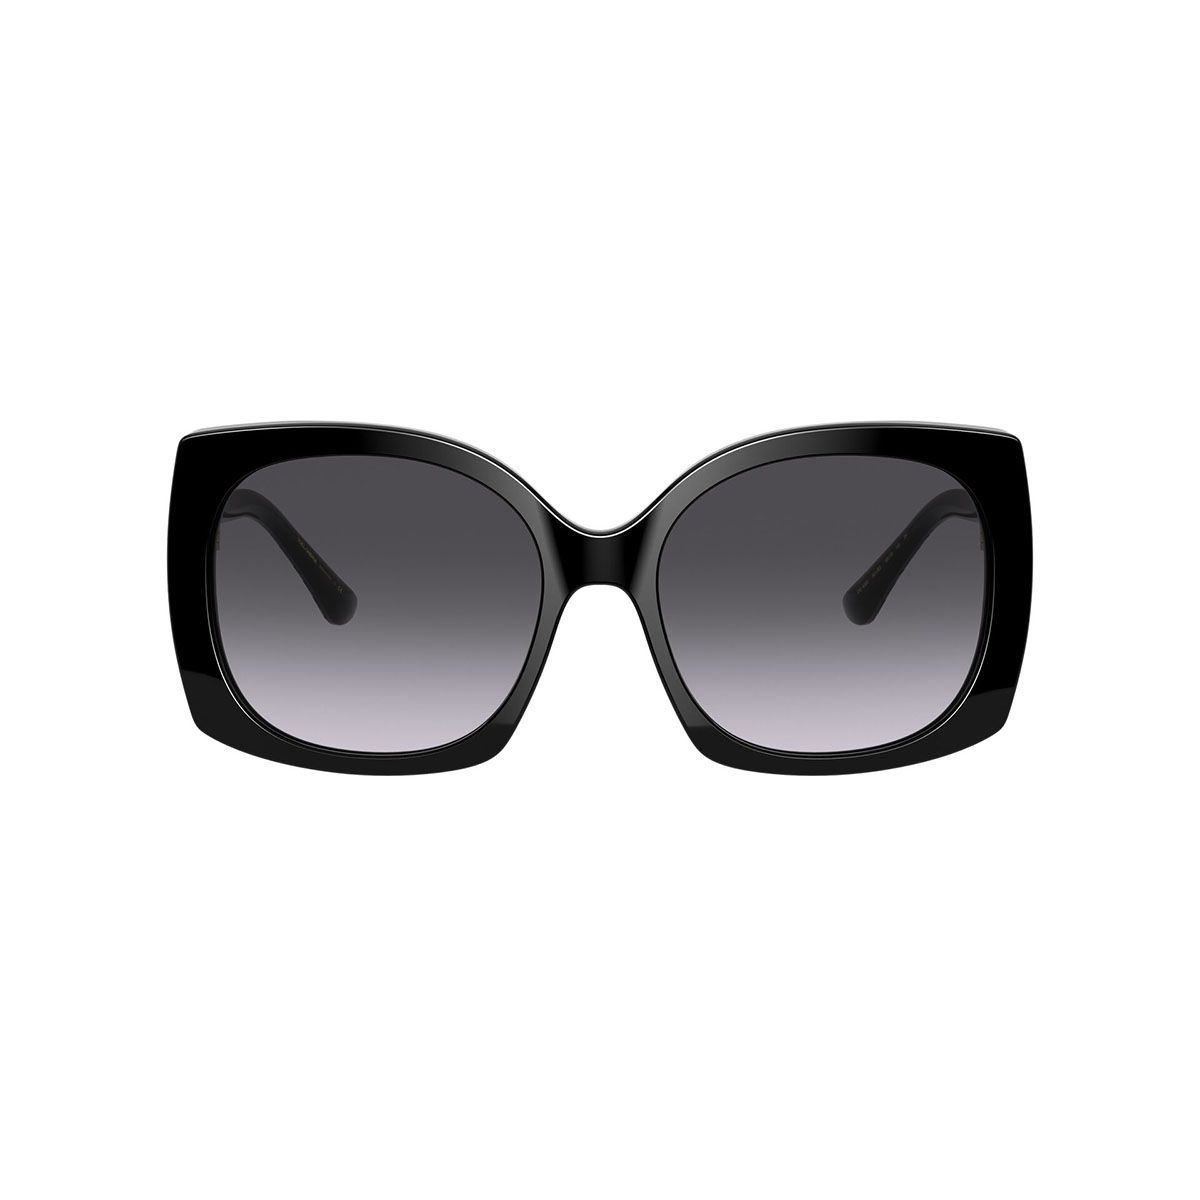 DG4385 Square Sunglasses 501 8G - size 58